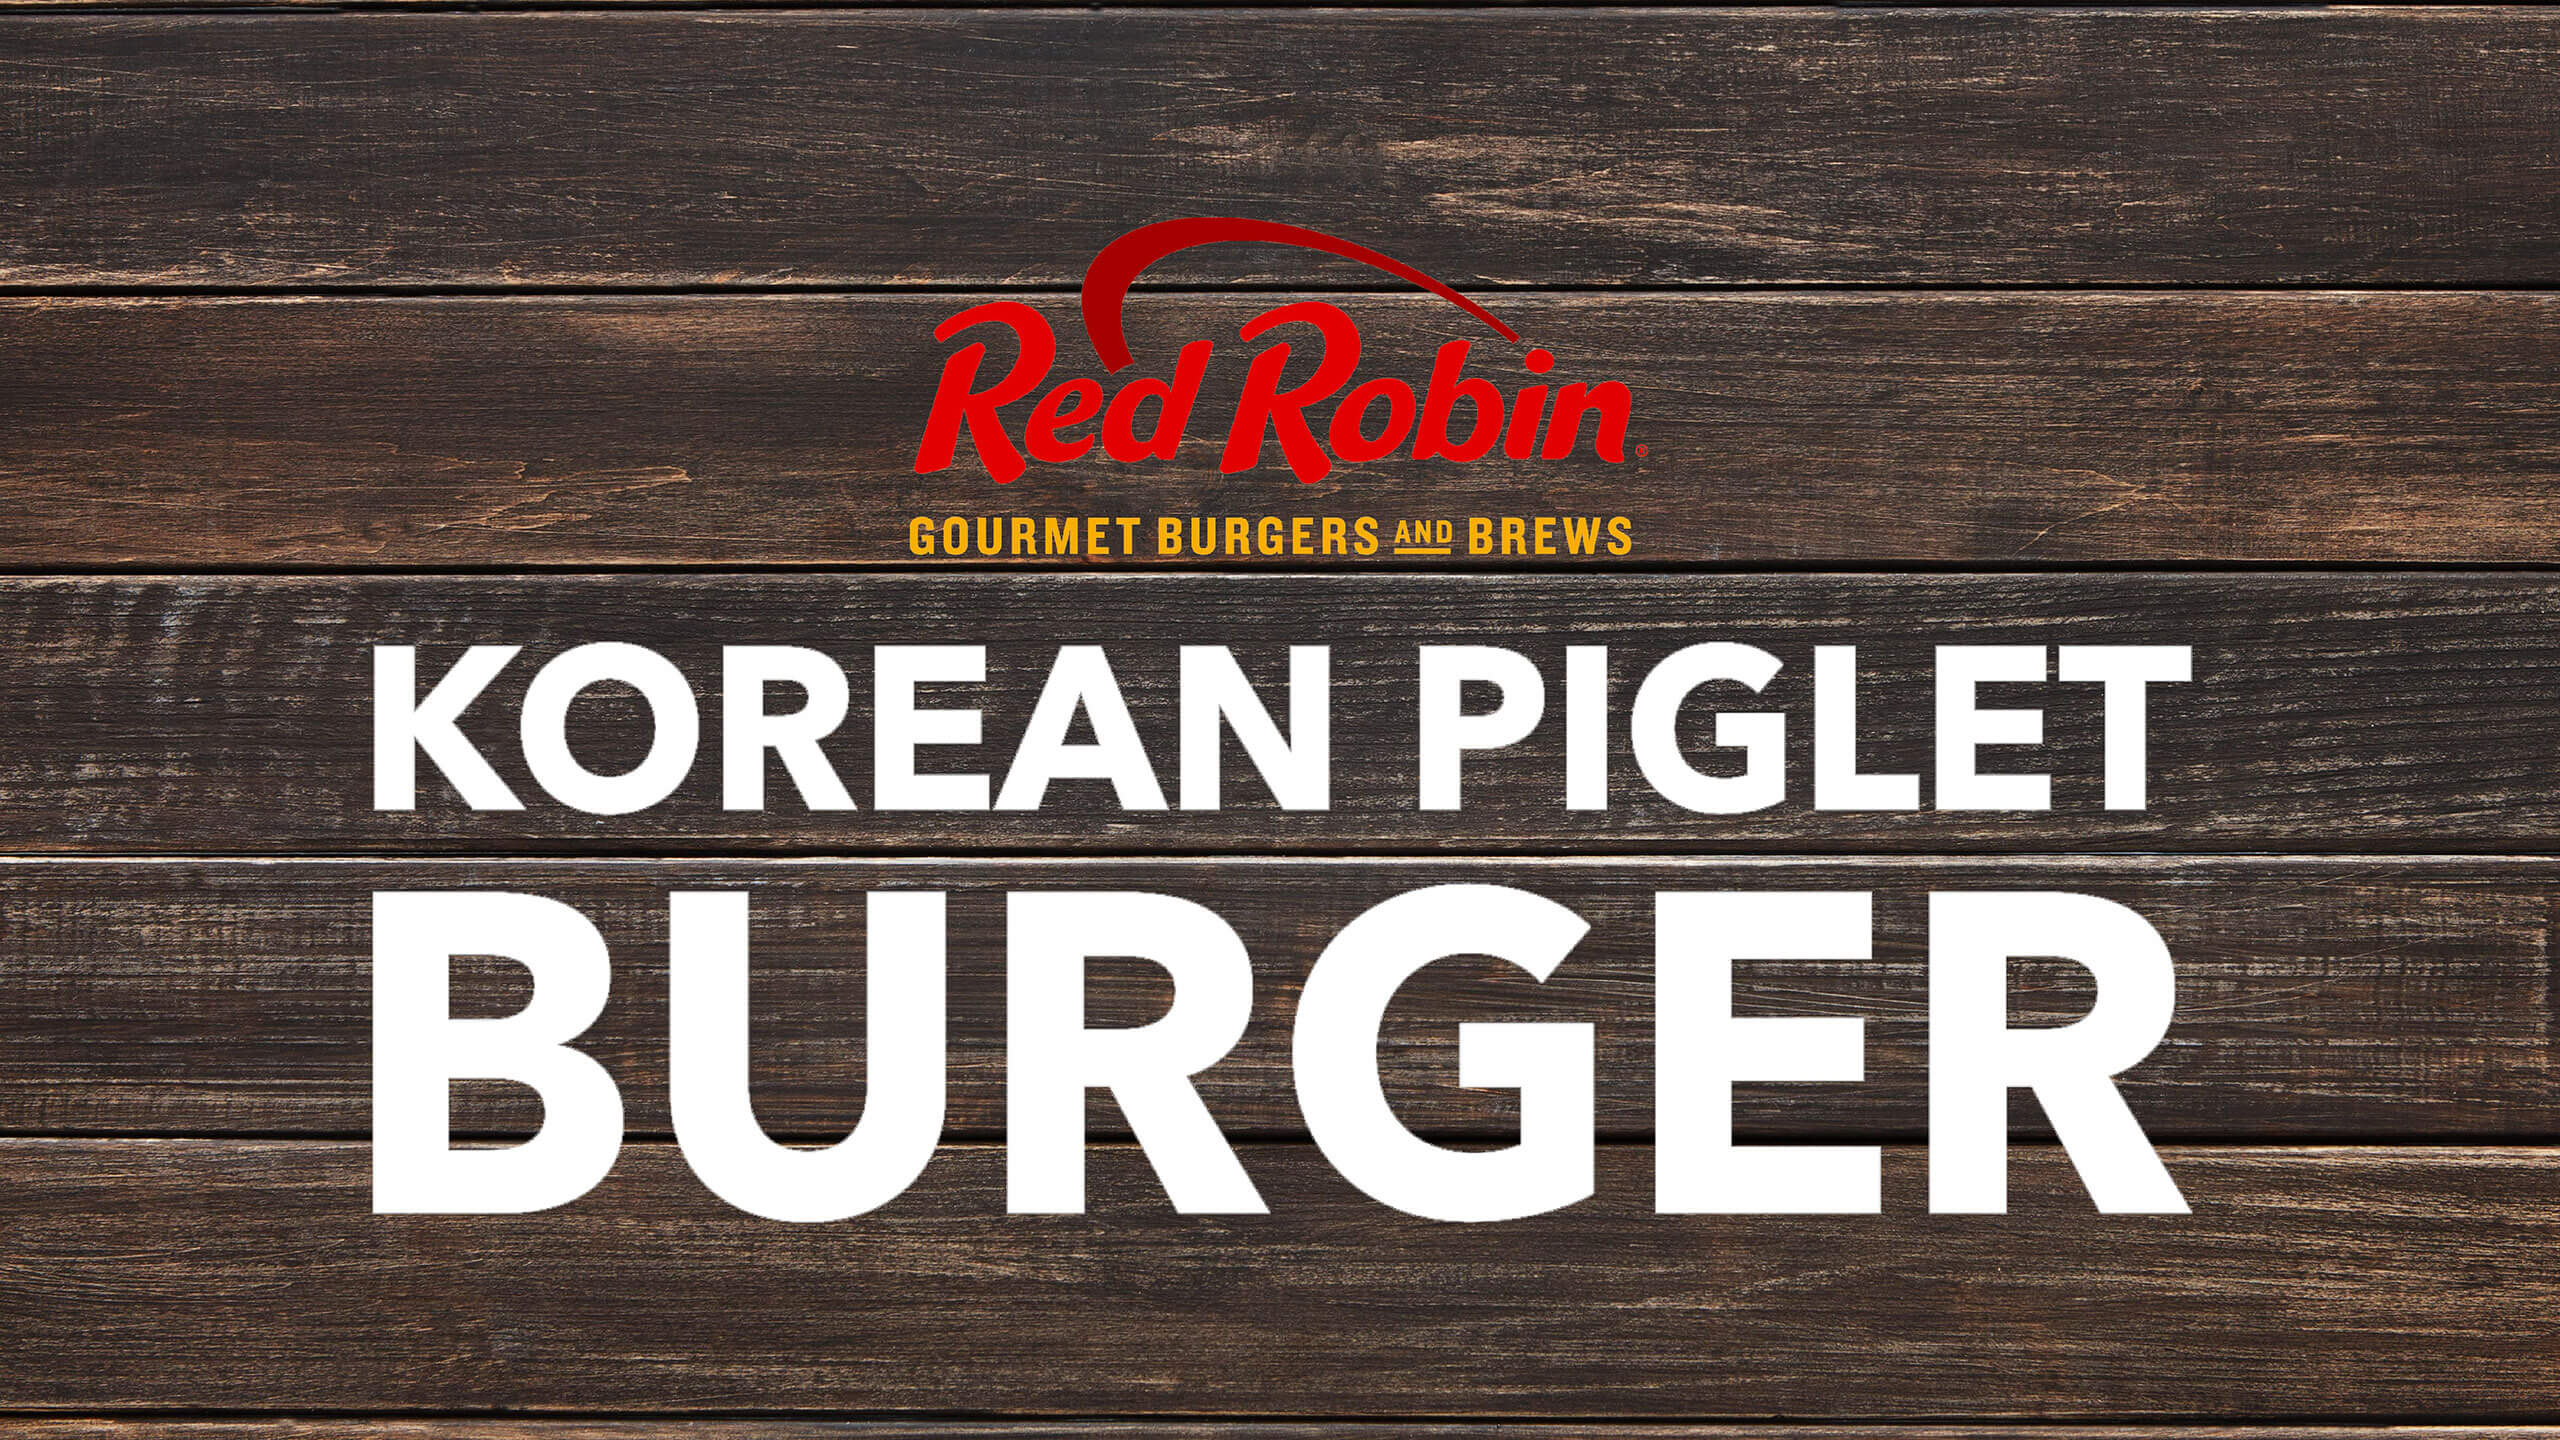 Red Robin Korean Piglet Burger